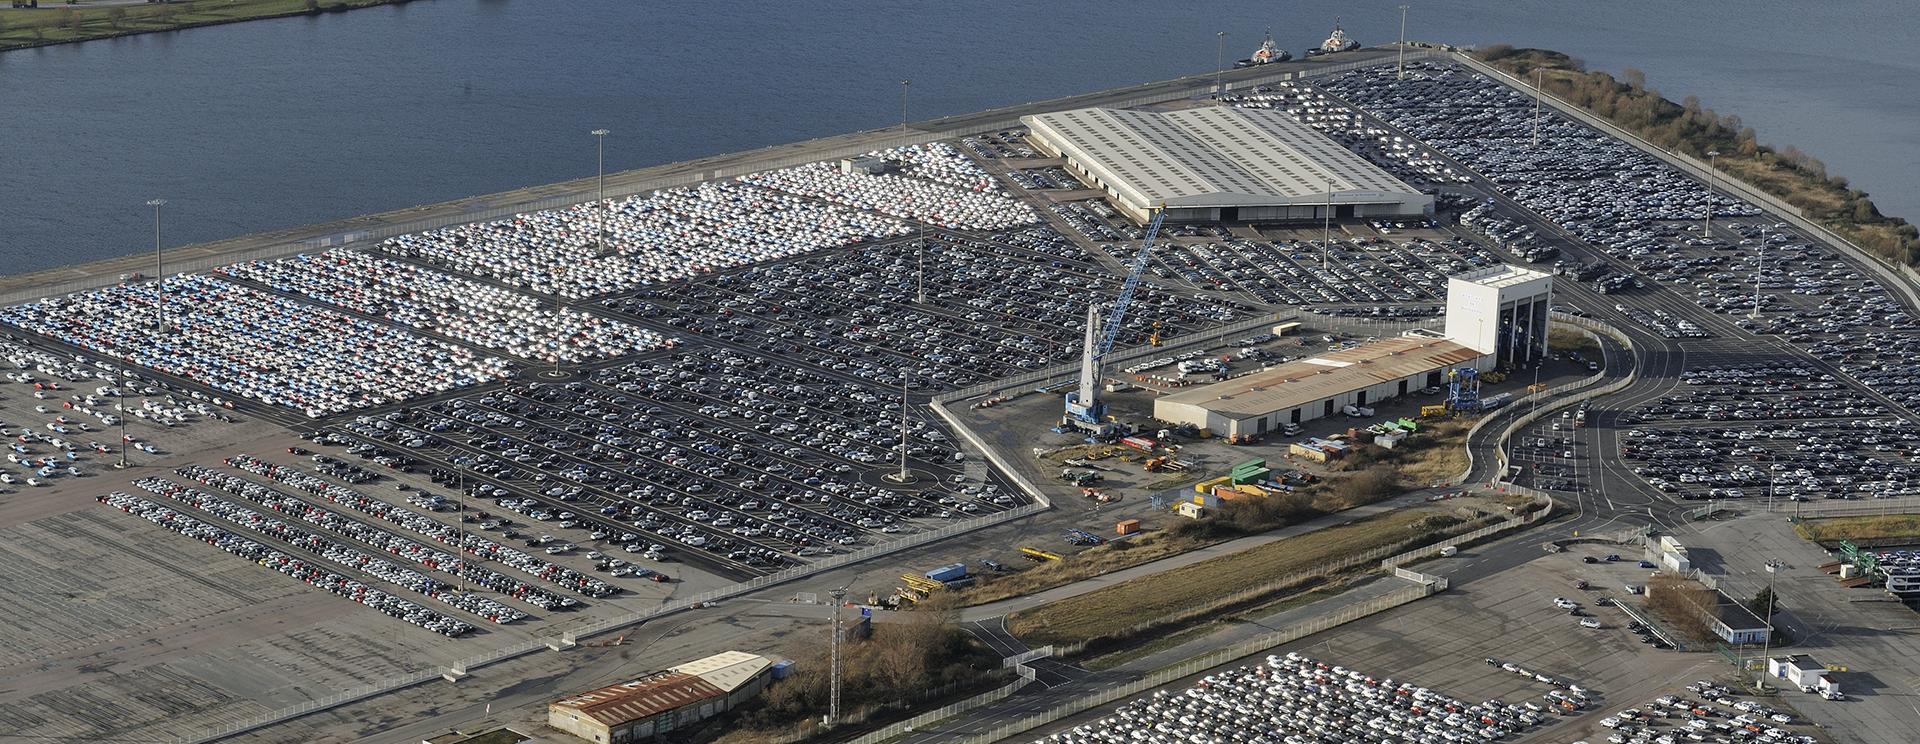 Stockage de voitures terminal RoRo au port du Havre